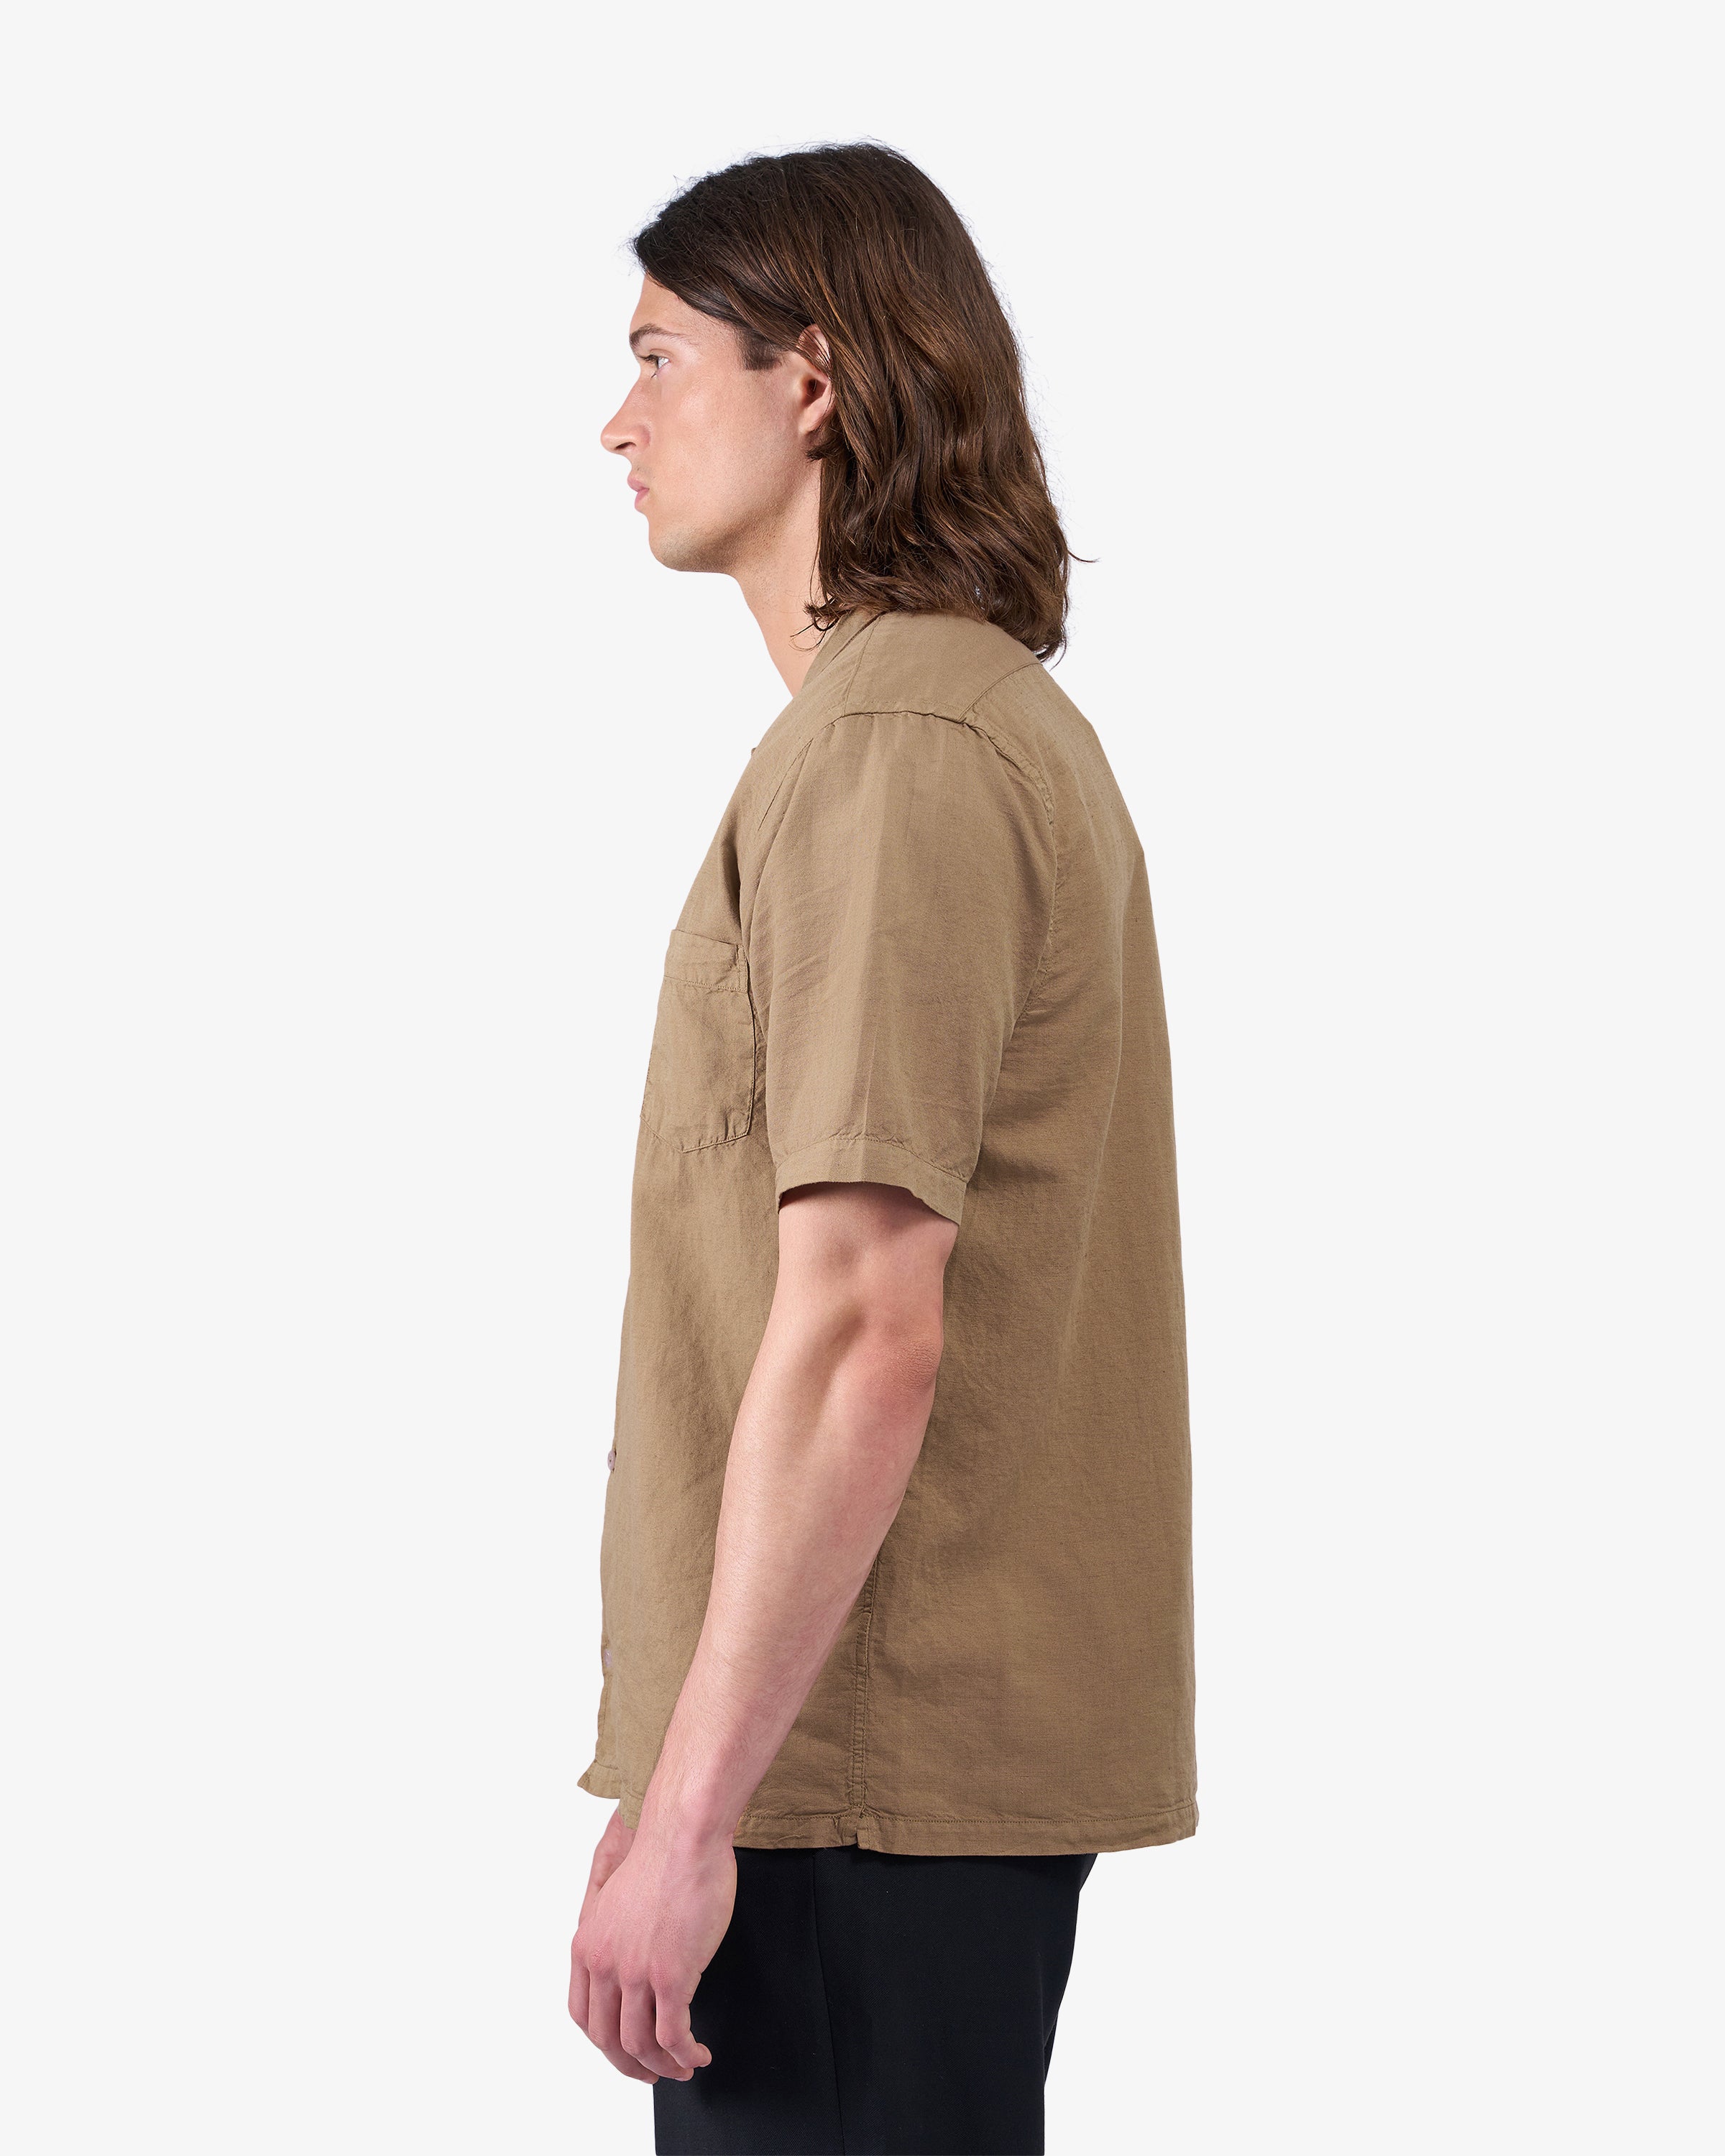 Linen Short Sleeved Shirt - Light Aqua